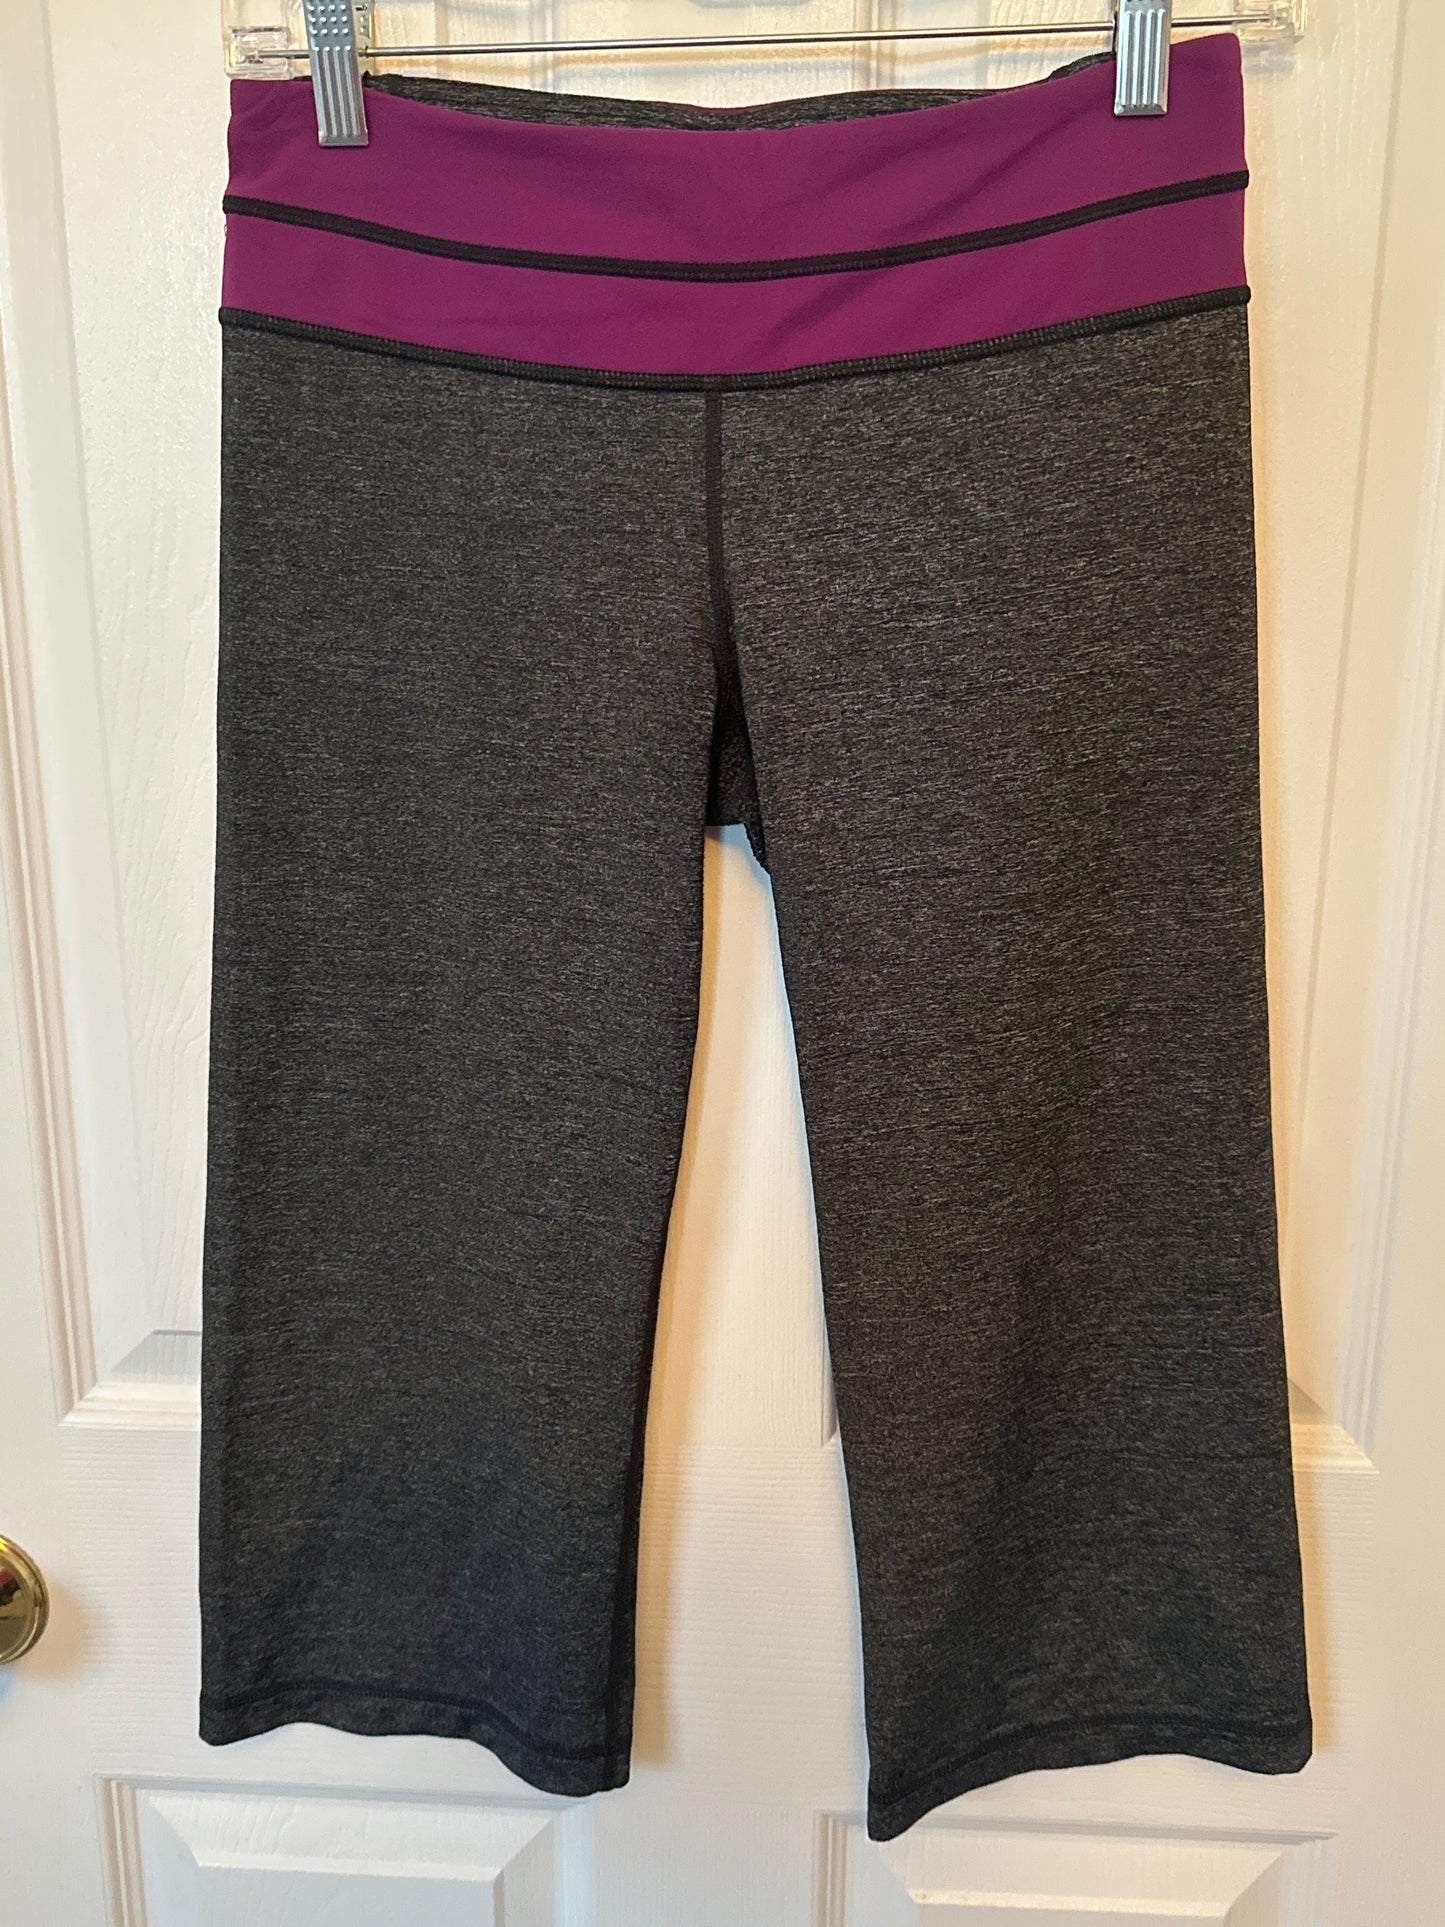 Lululemon Women’s Charcoal Gray and Purple Sz 6 Cropped Capri Pants Leggings